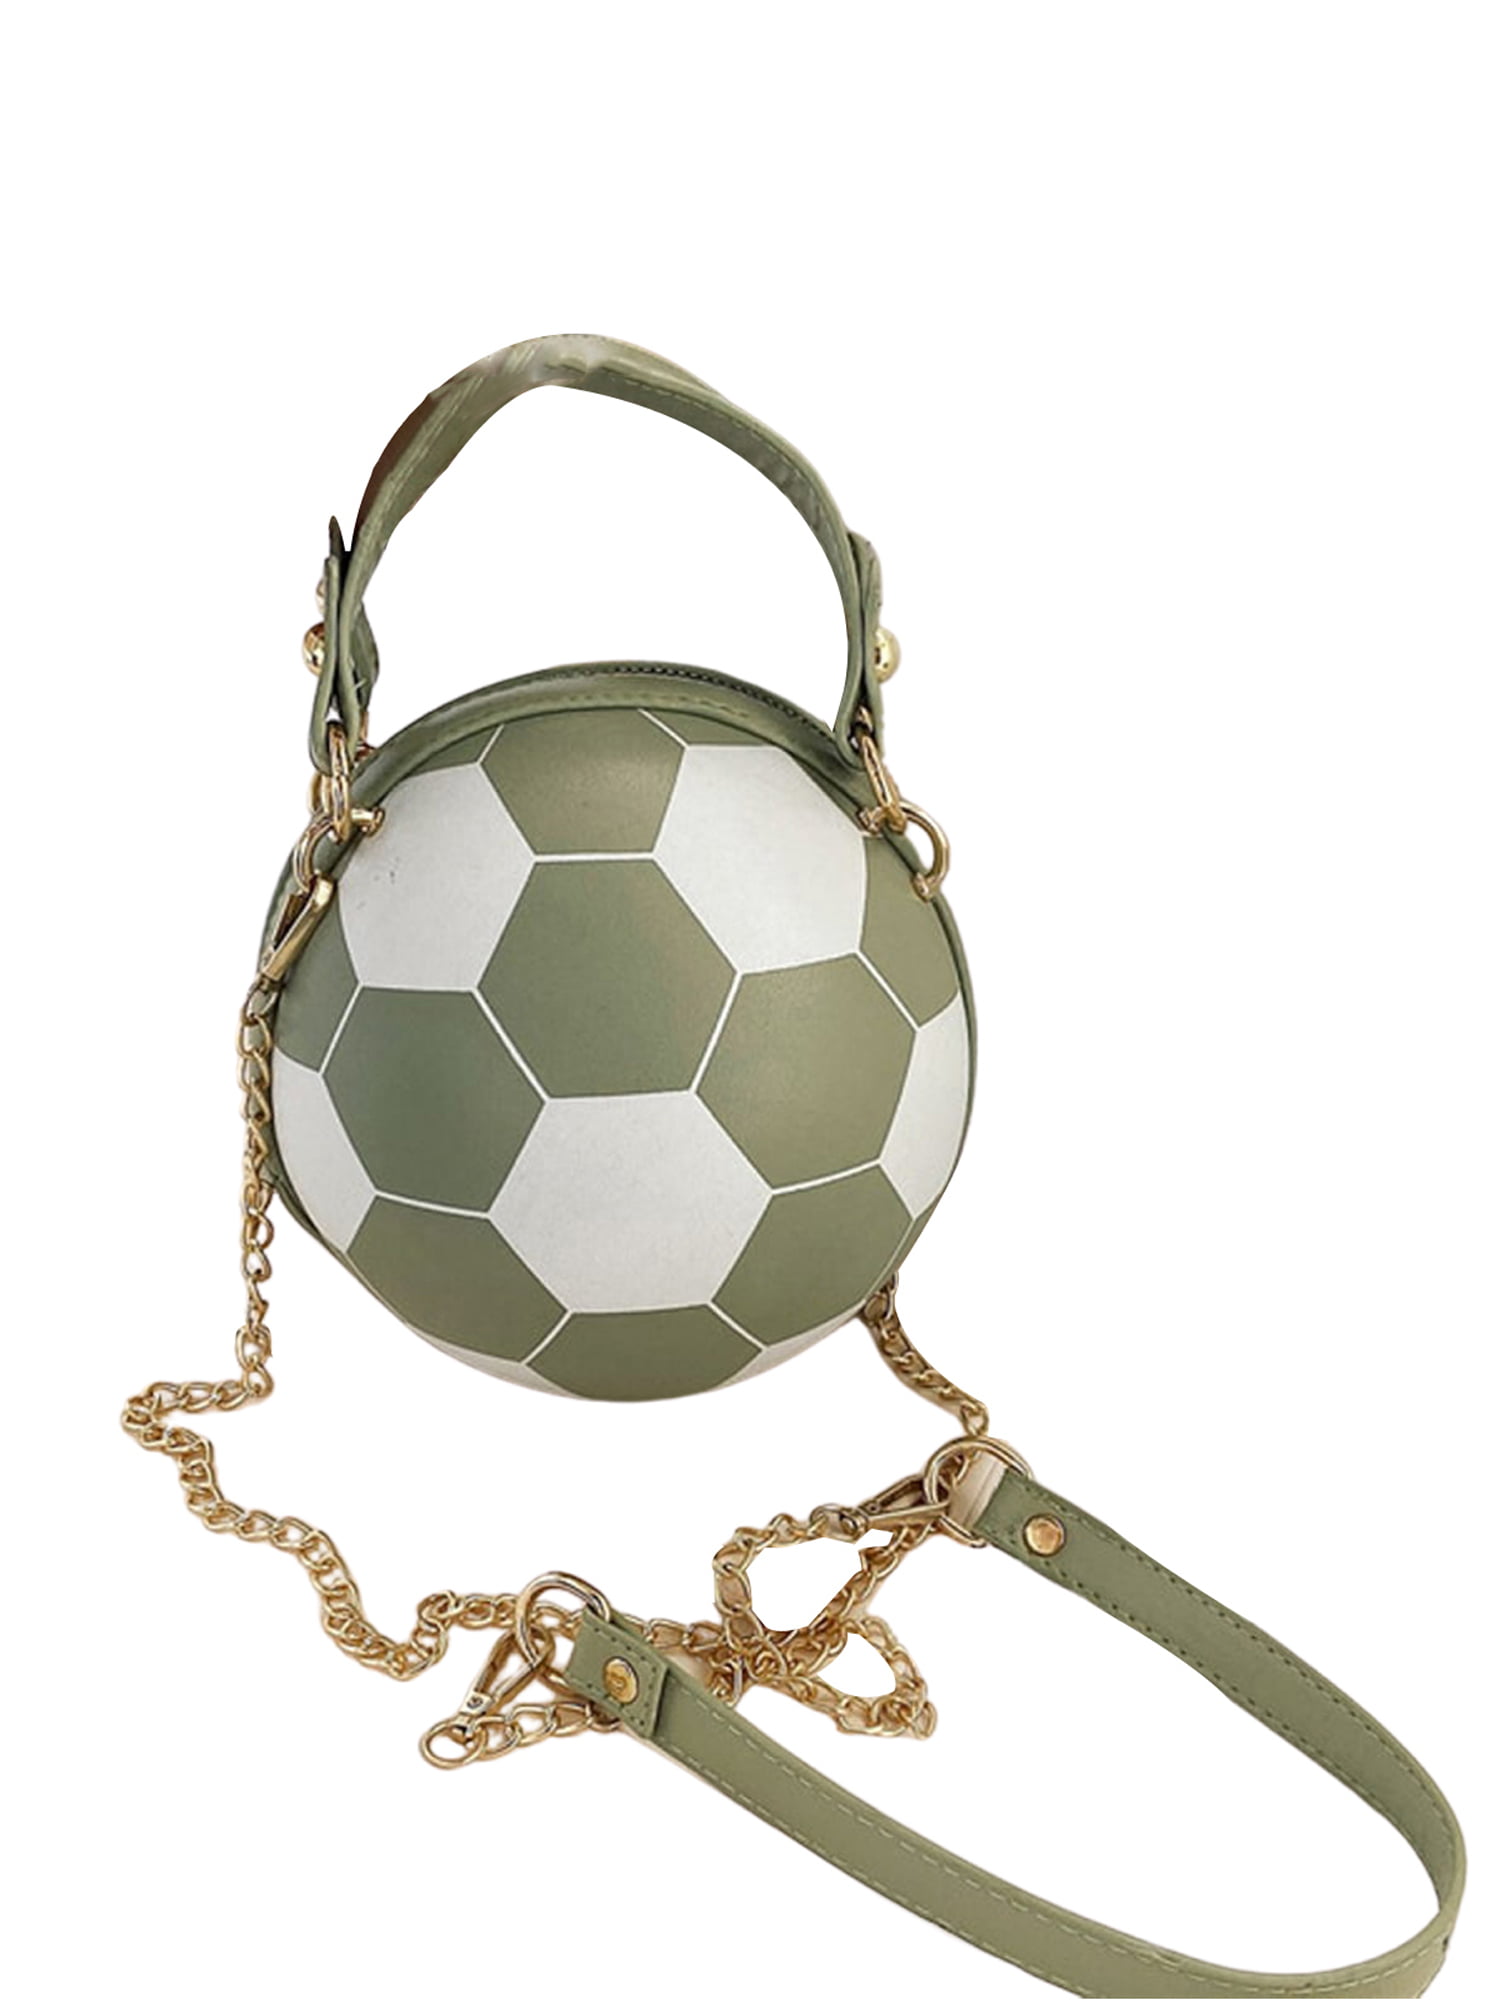 Puloru Basketball Shoulder Bag, Stylish Round Football Shaped Crossbody Bag  with Long Strap 